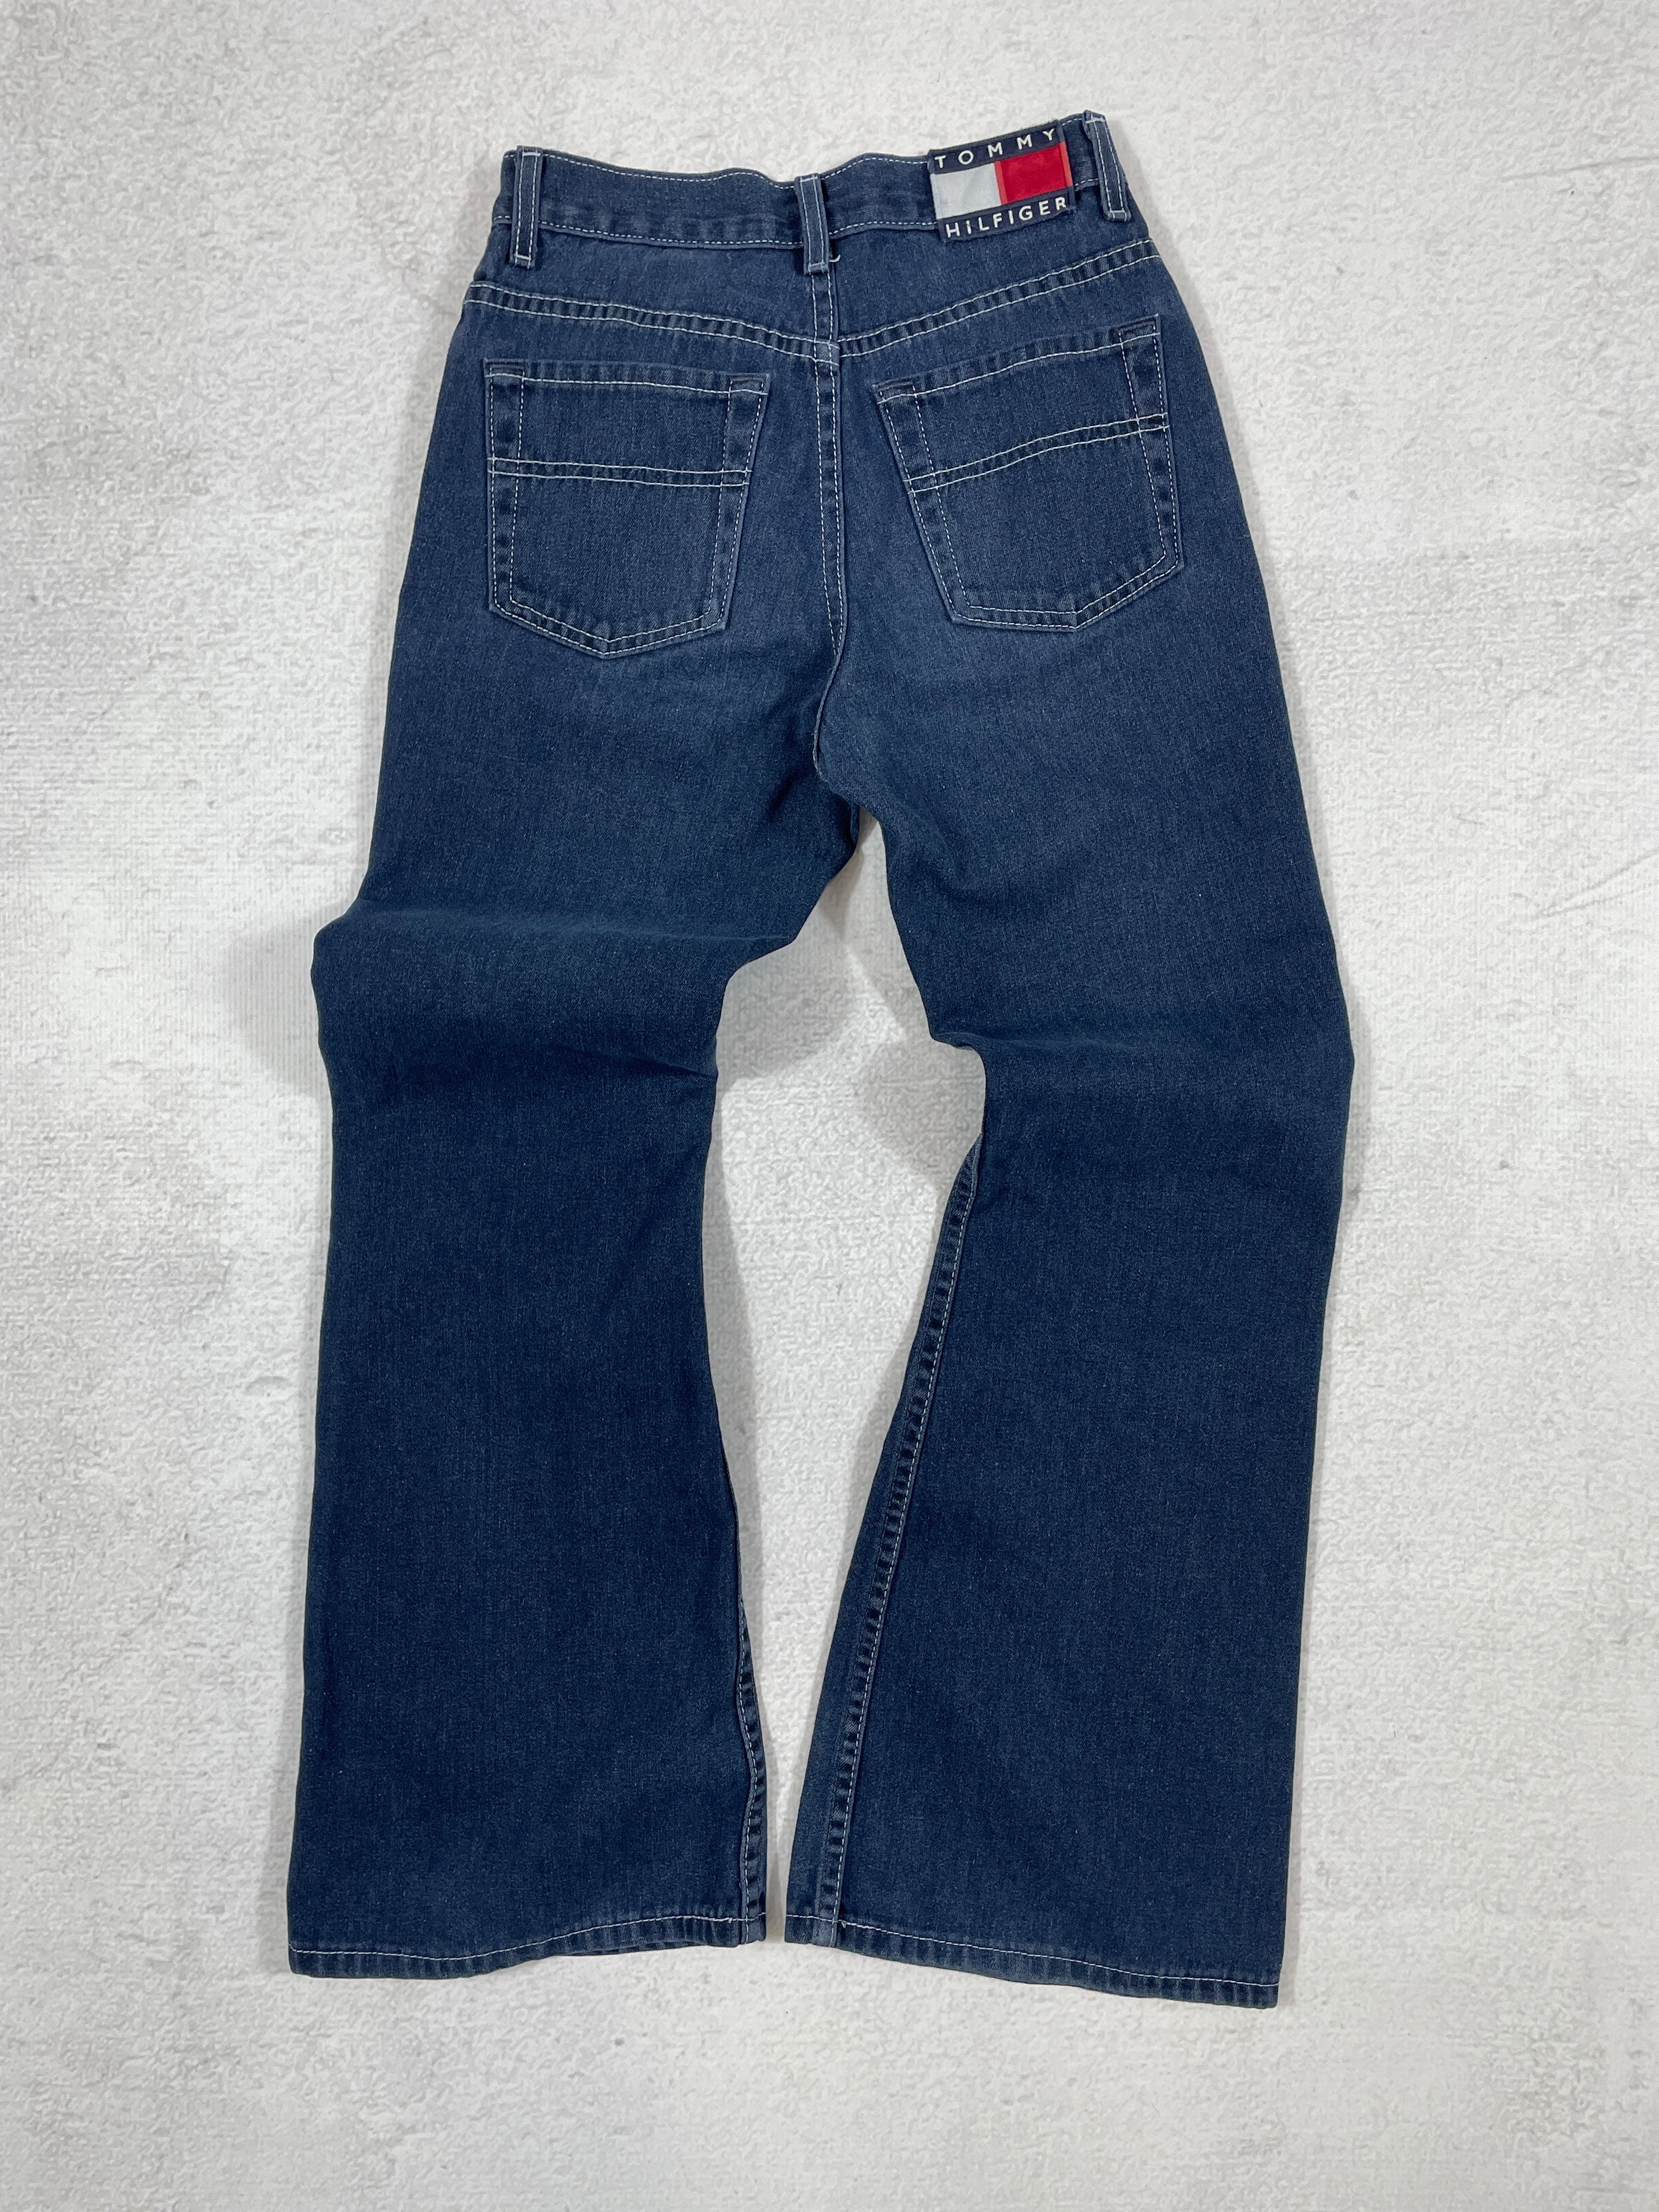 Vintage Tommy Hilfiger Flare Jeans - Women's 28WX30L